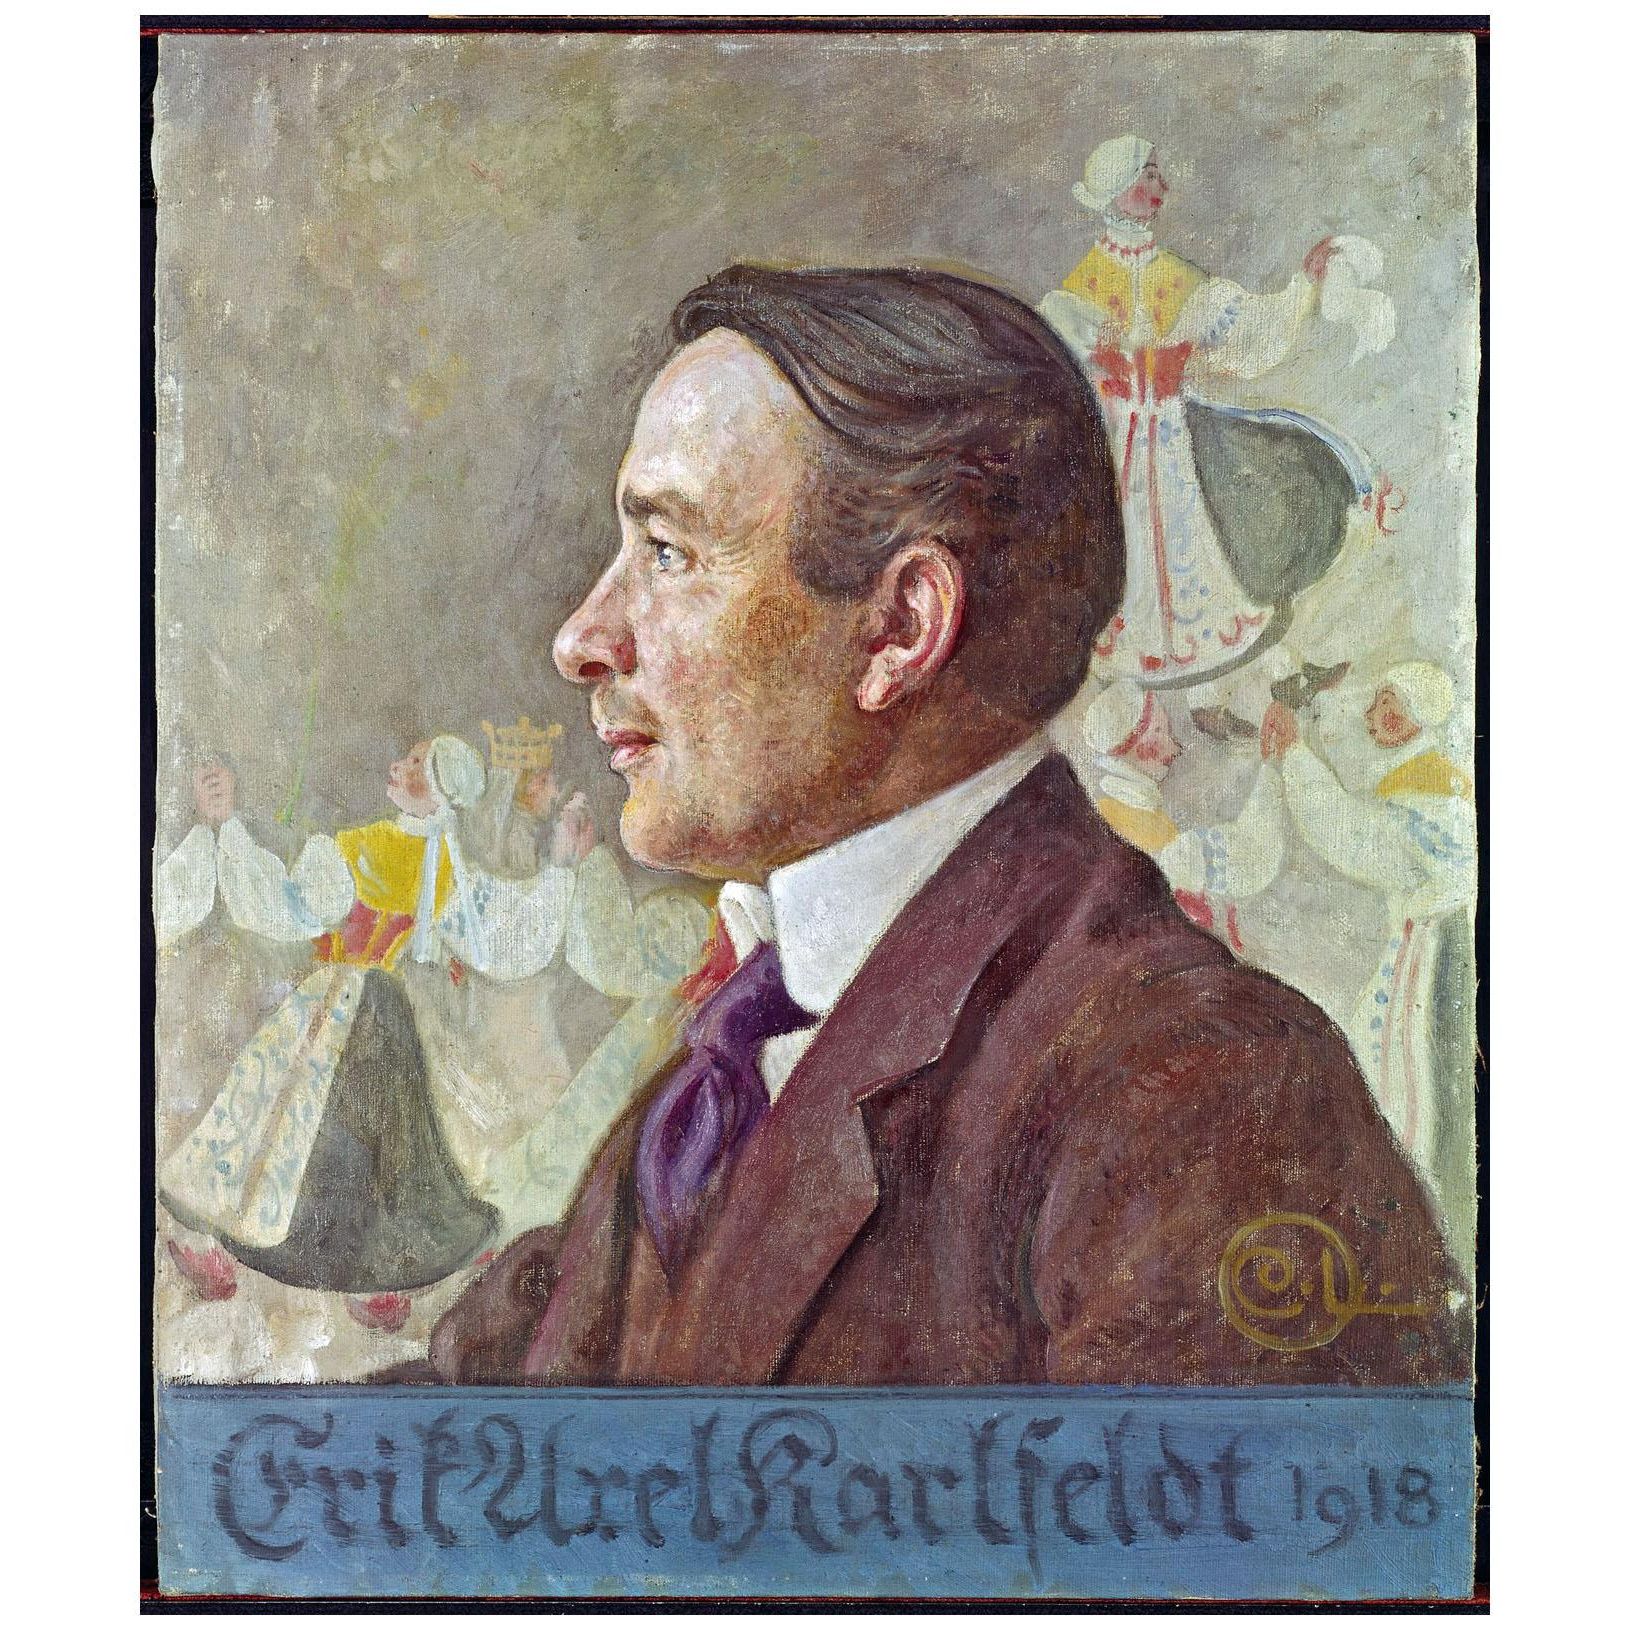 Carl Larsson. Erik Axel Karlfedt. 1918. Nationalmuseum Stockholm